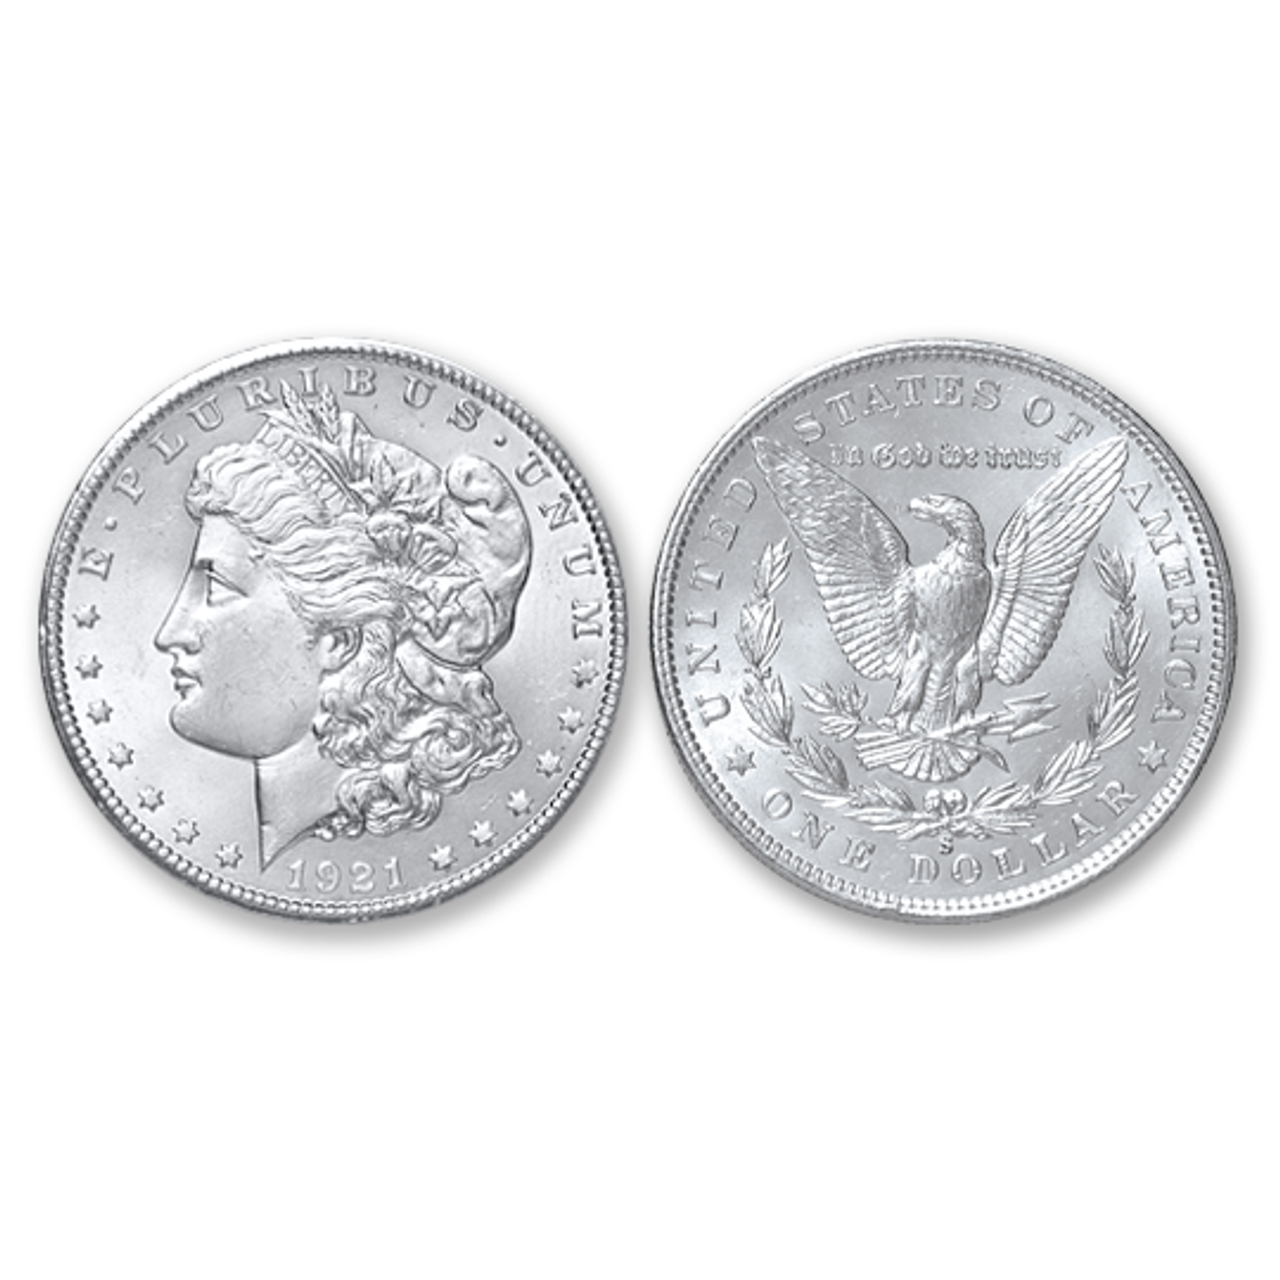 Morgan silver dollar mint mark